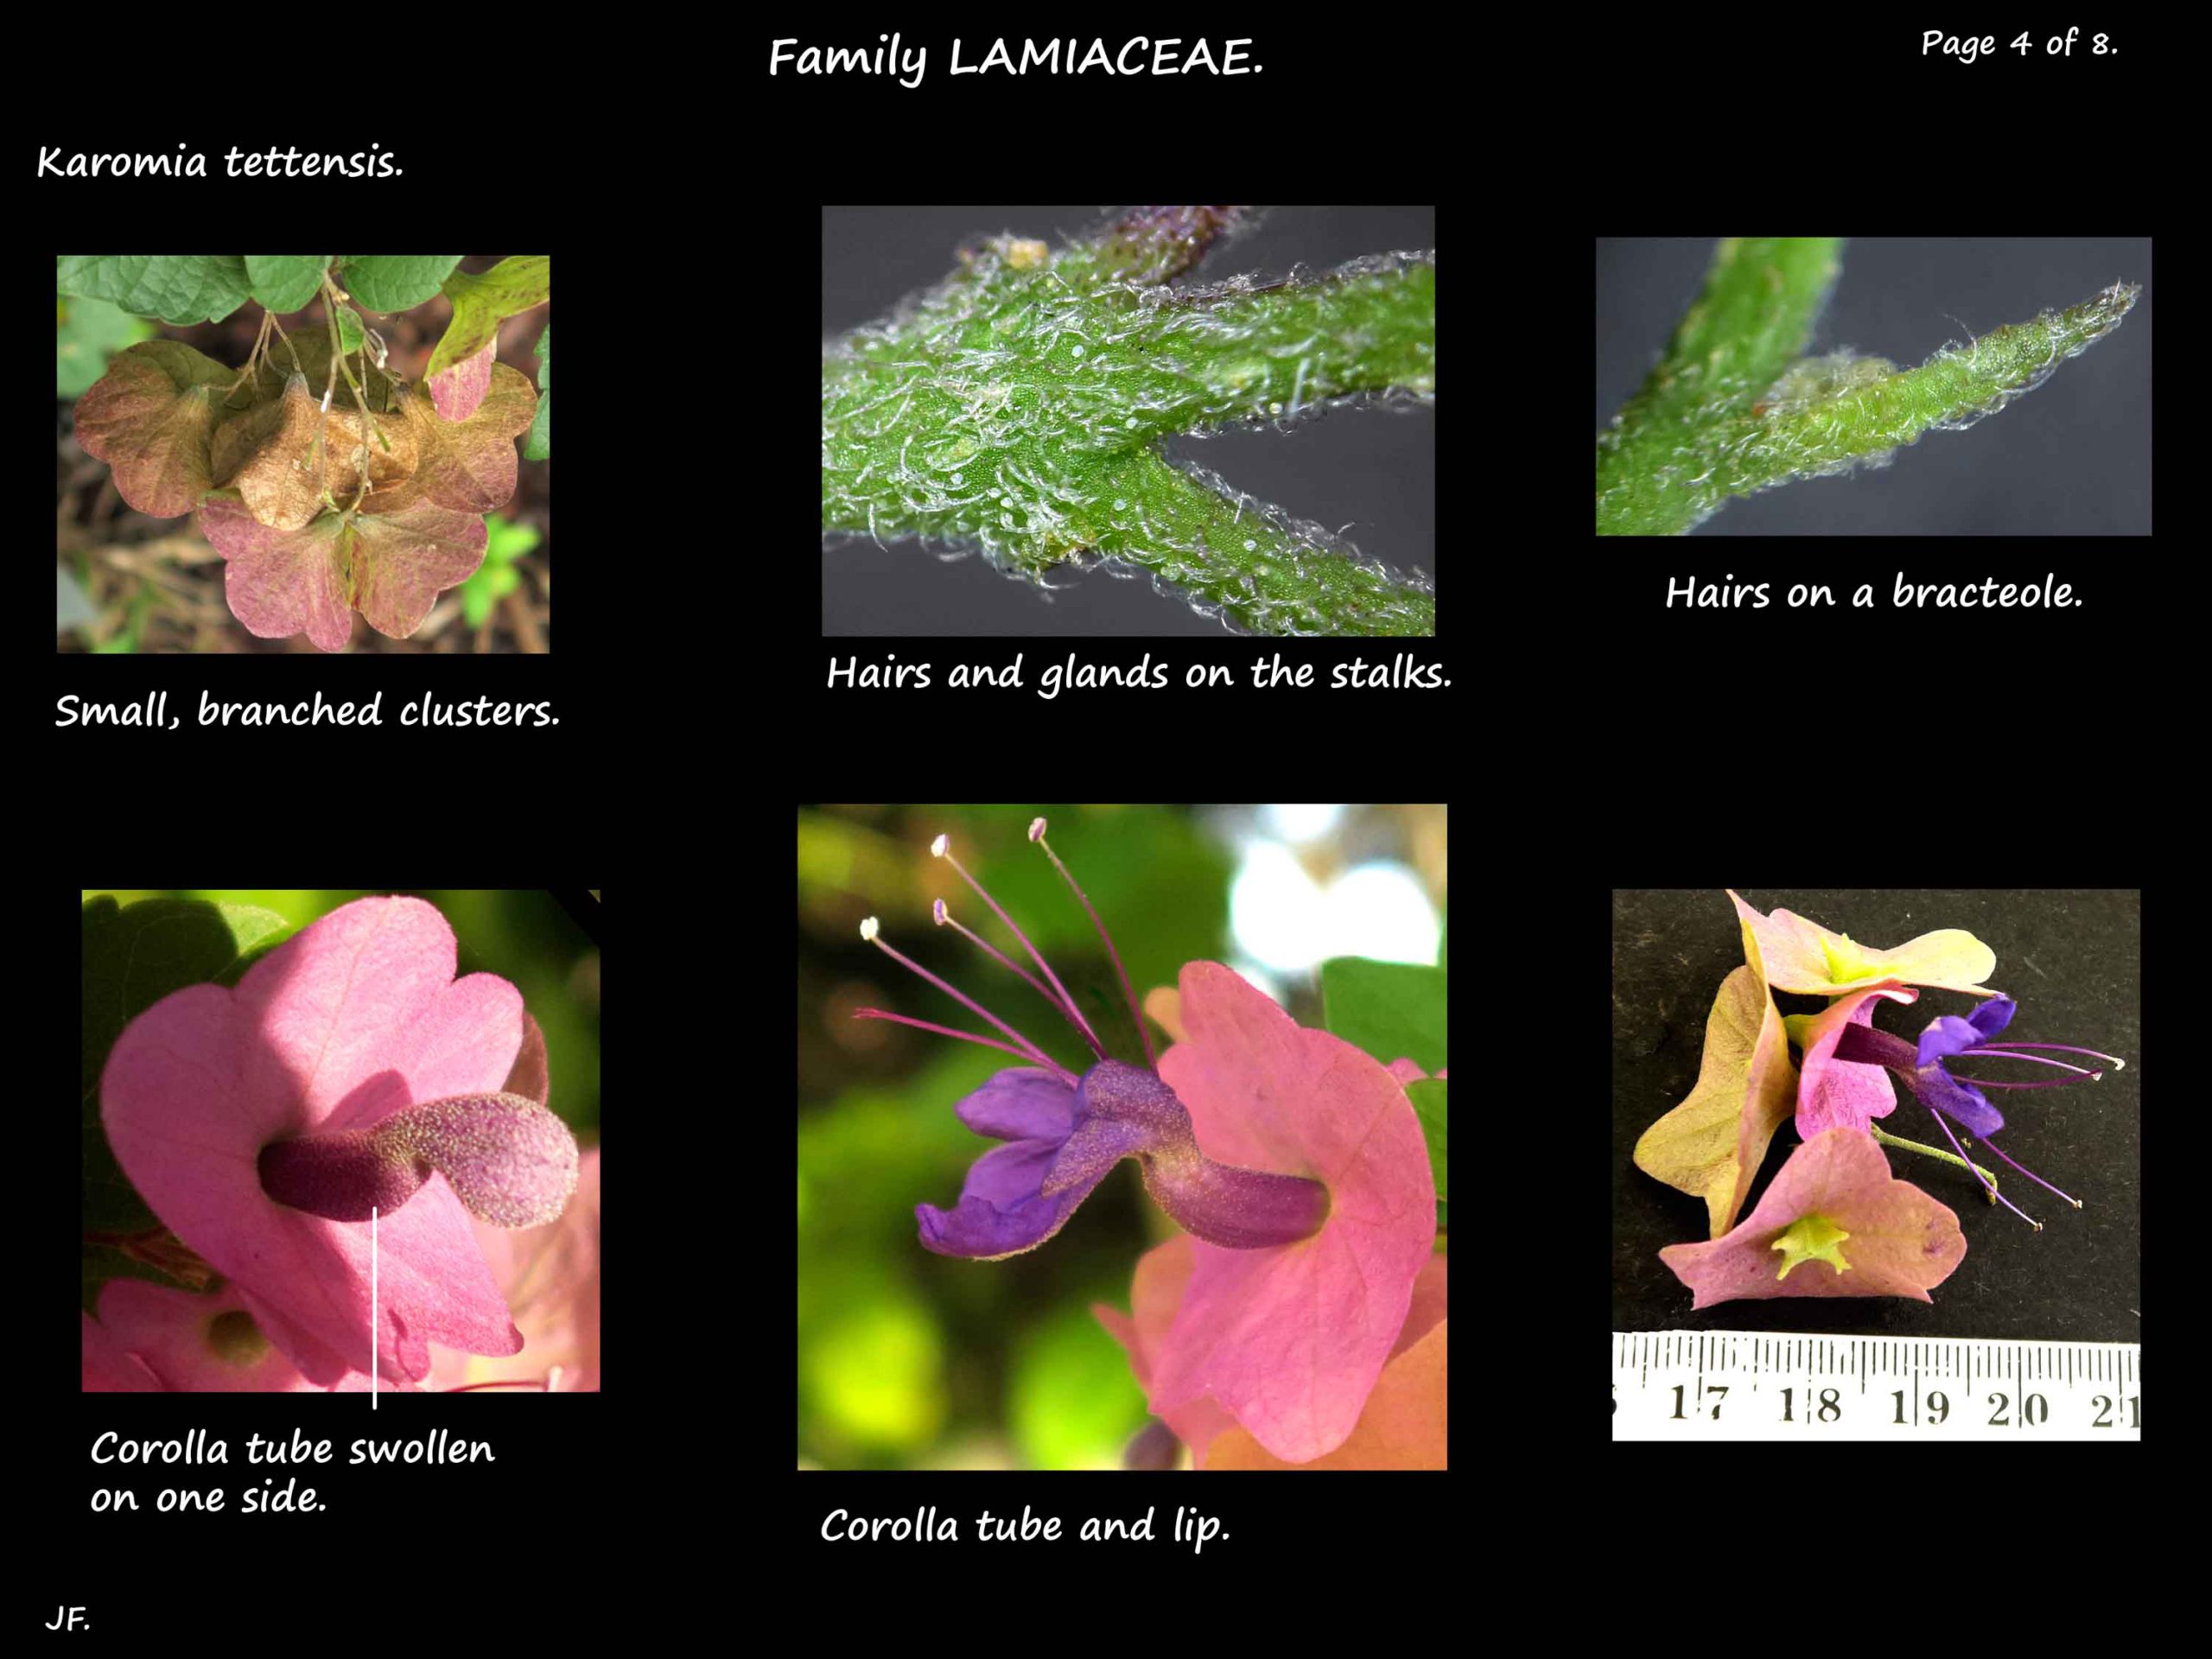 4 Flowers of Karomia tettensis